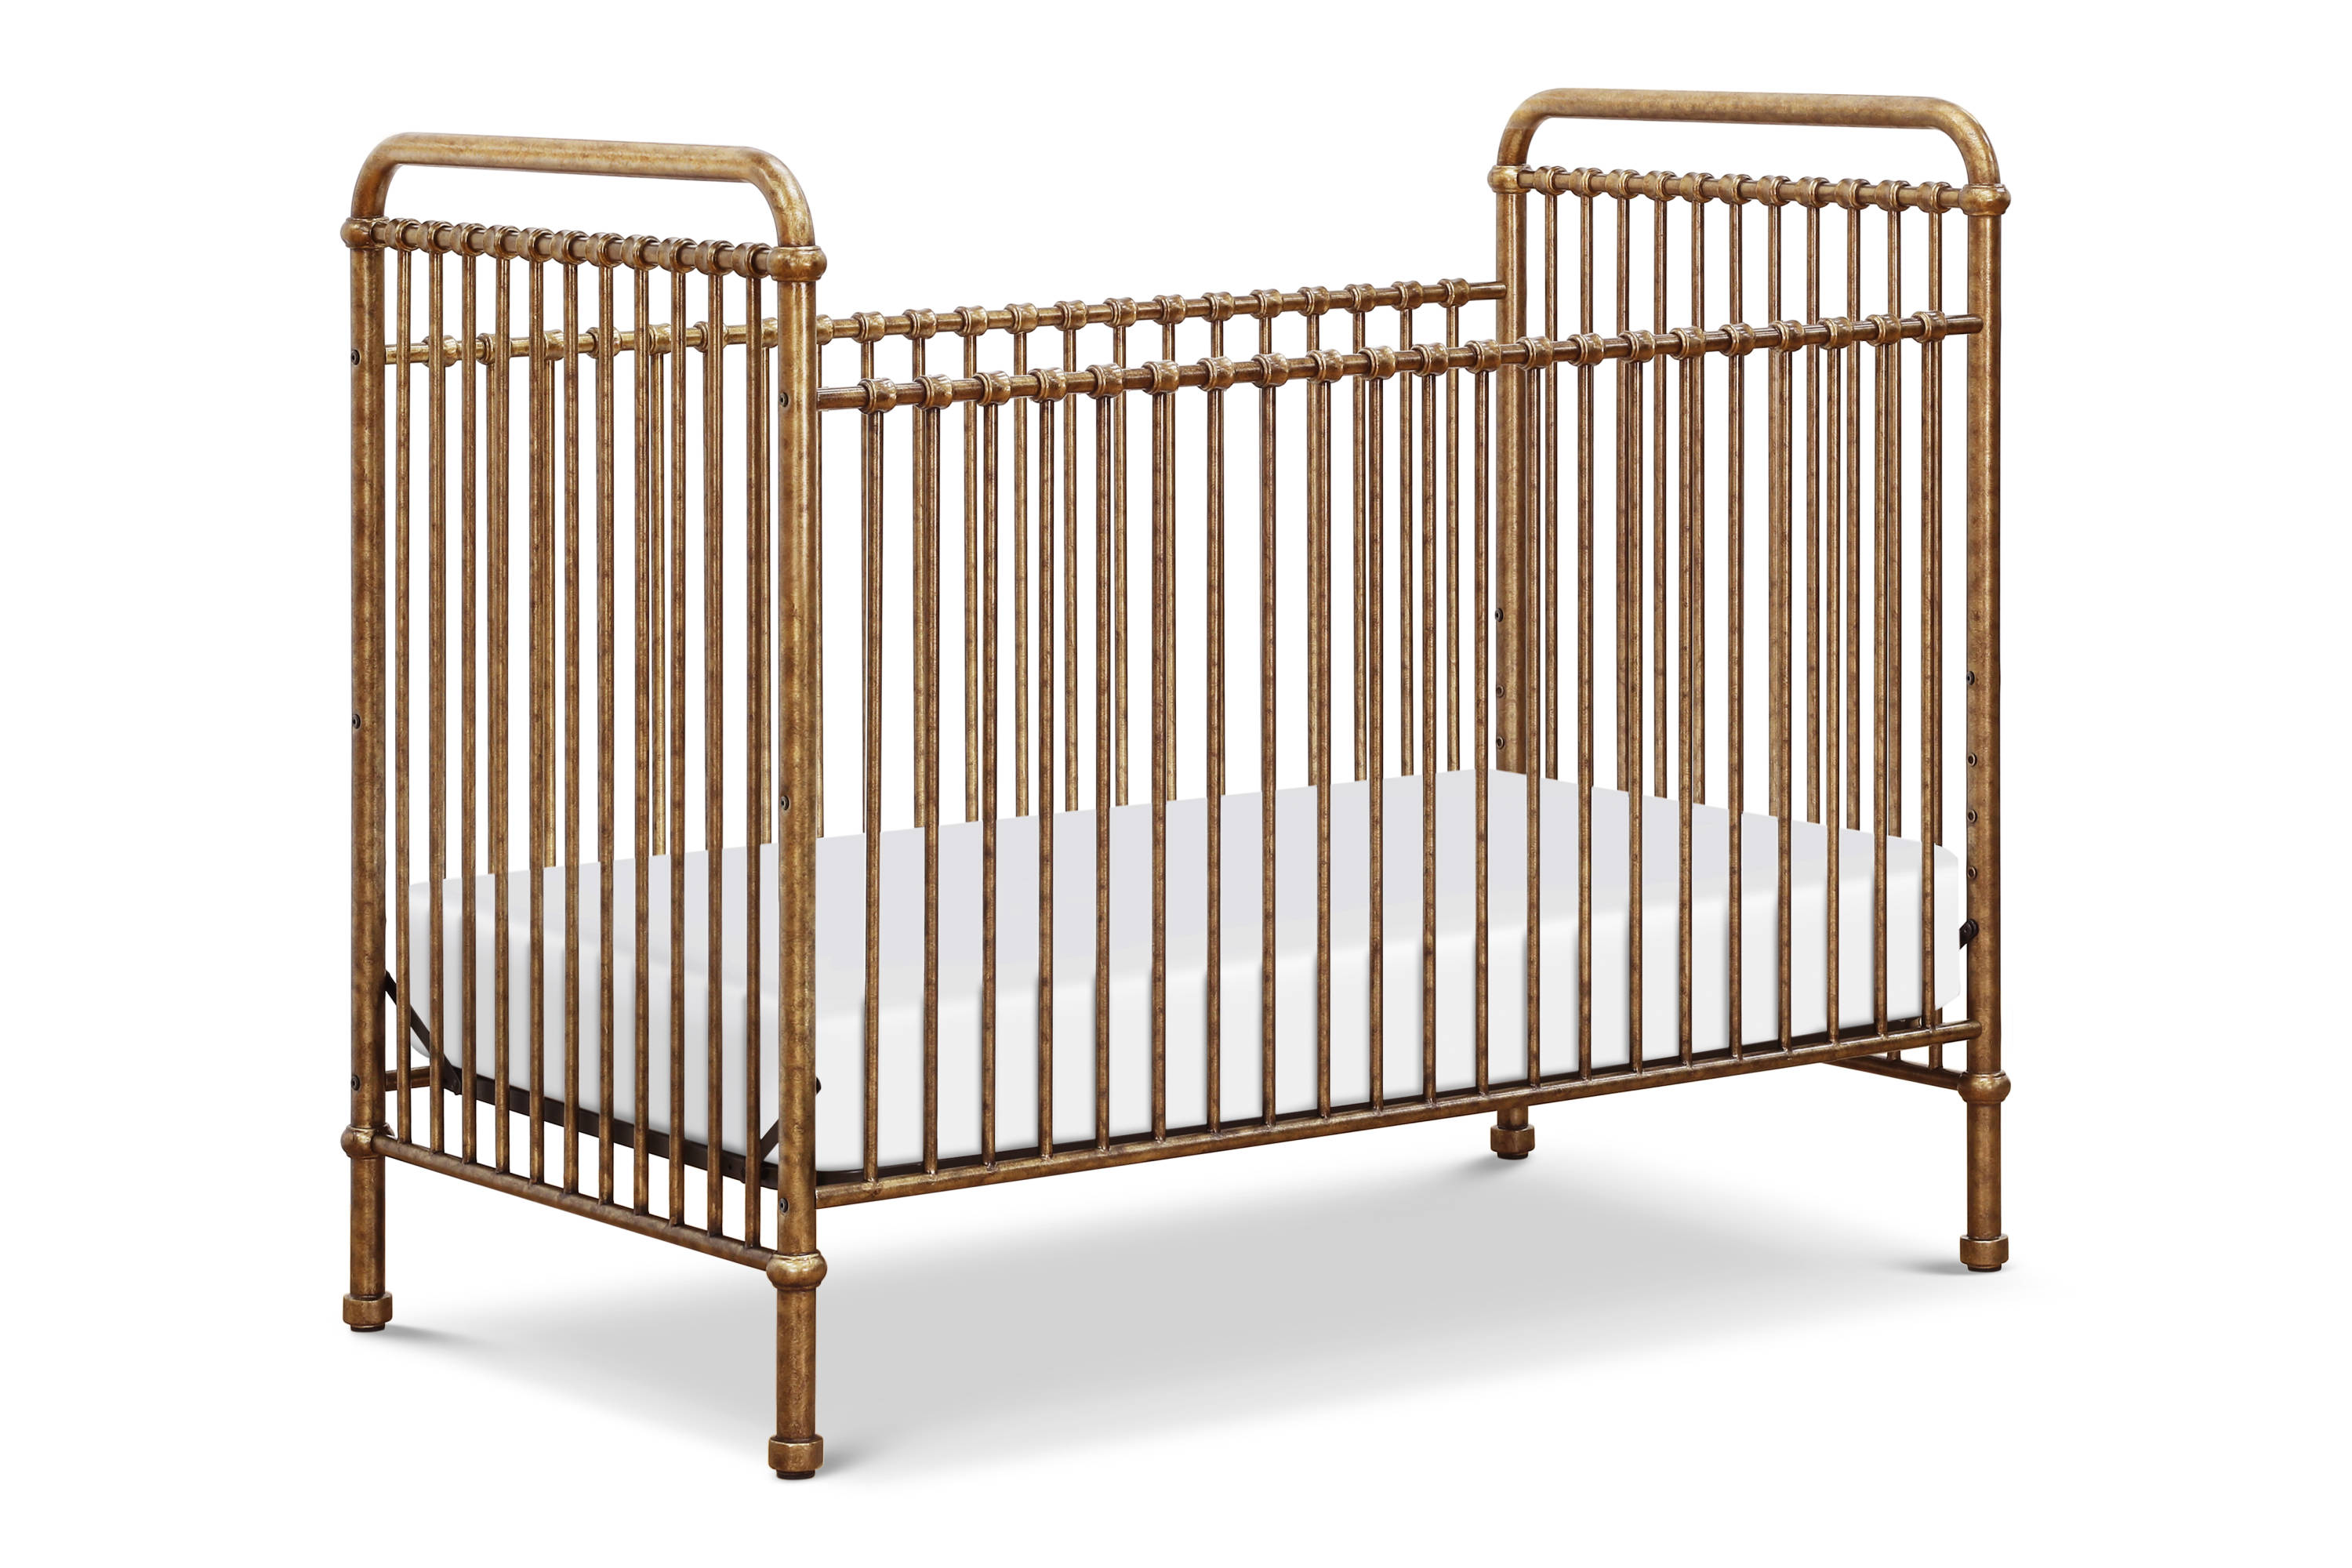 cozee bedside crib mattress size